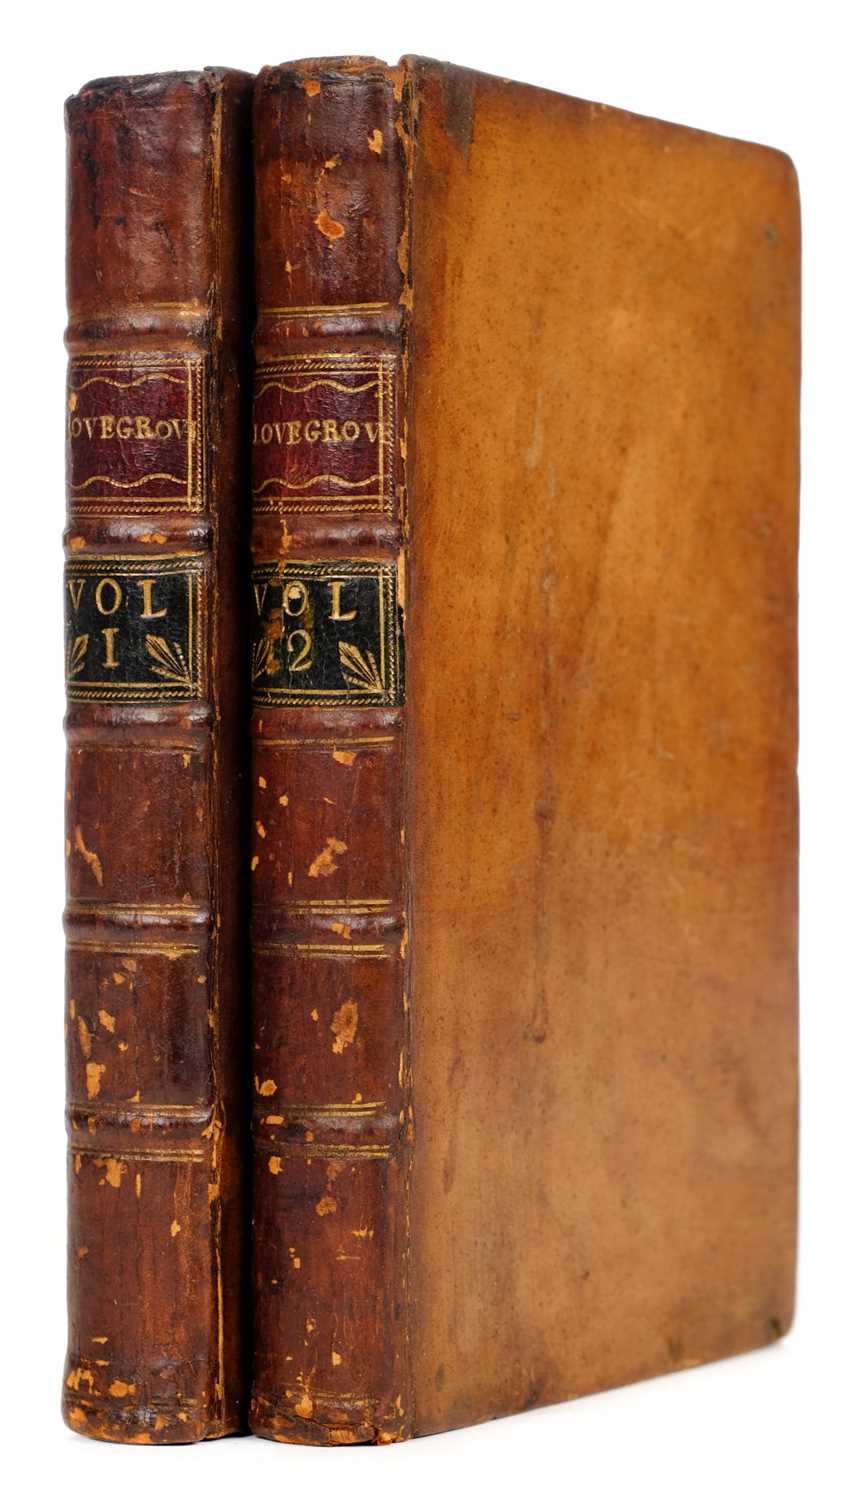 Lot 236 - Ridley (James). The History of James Lovegrove, Esq. 1st edition, 1761